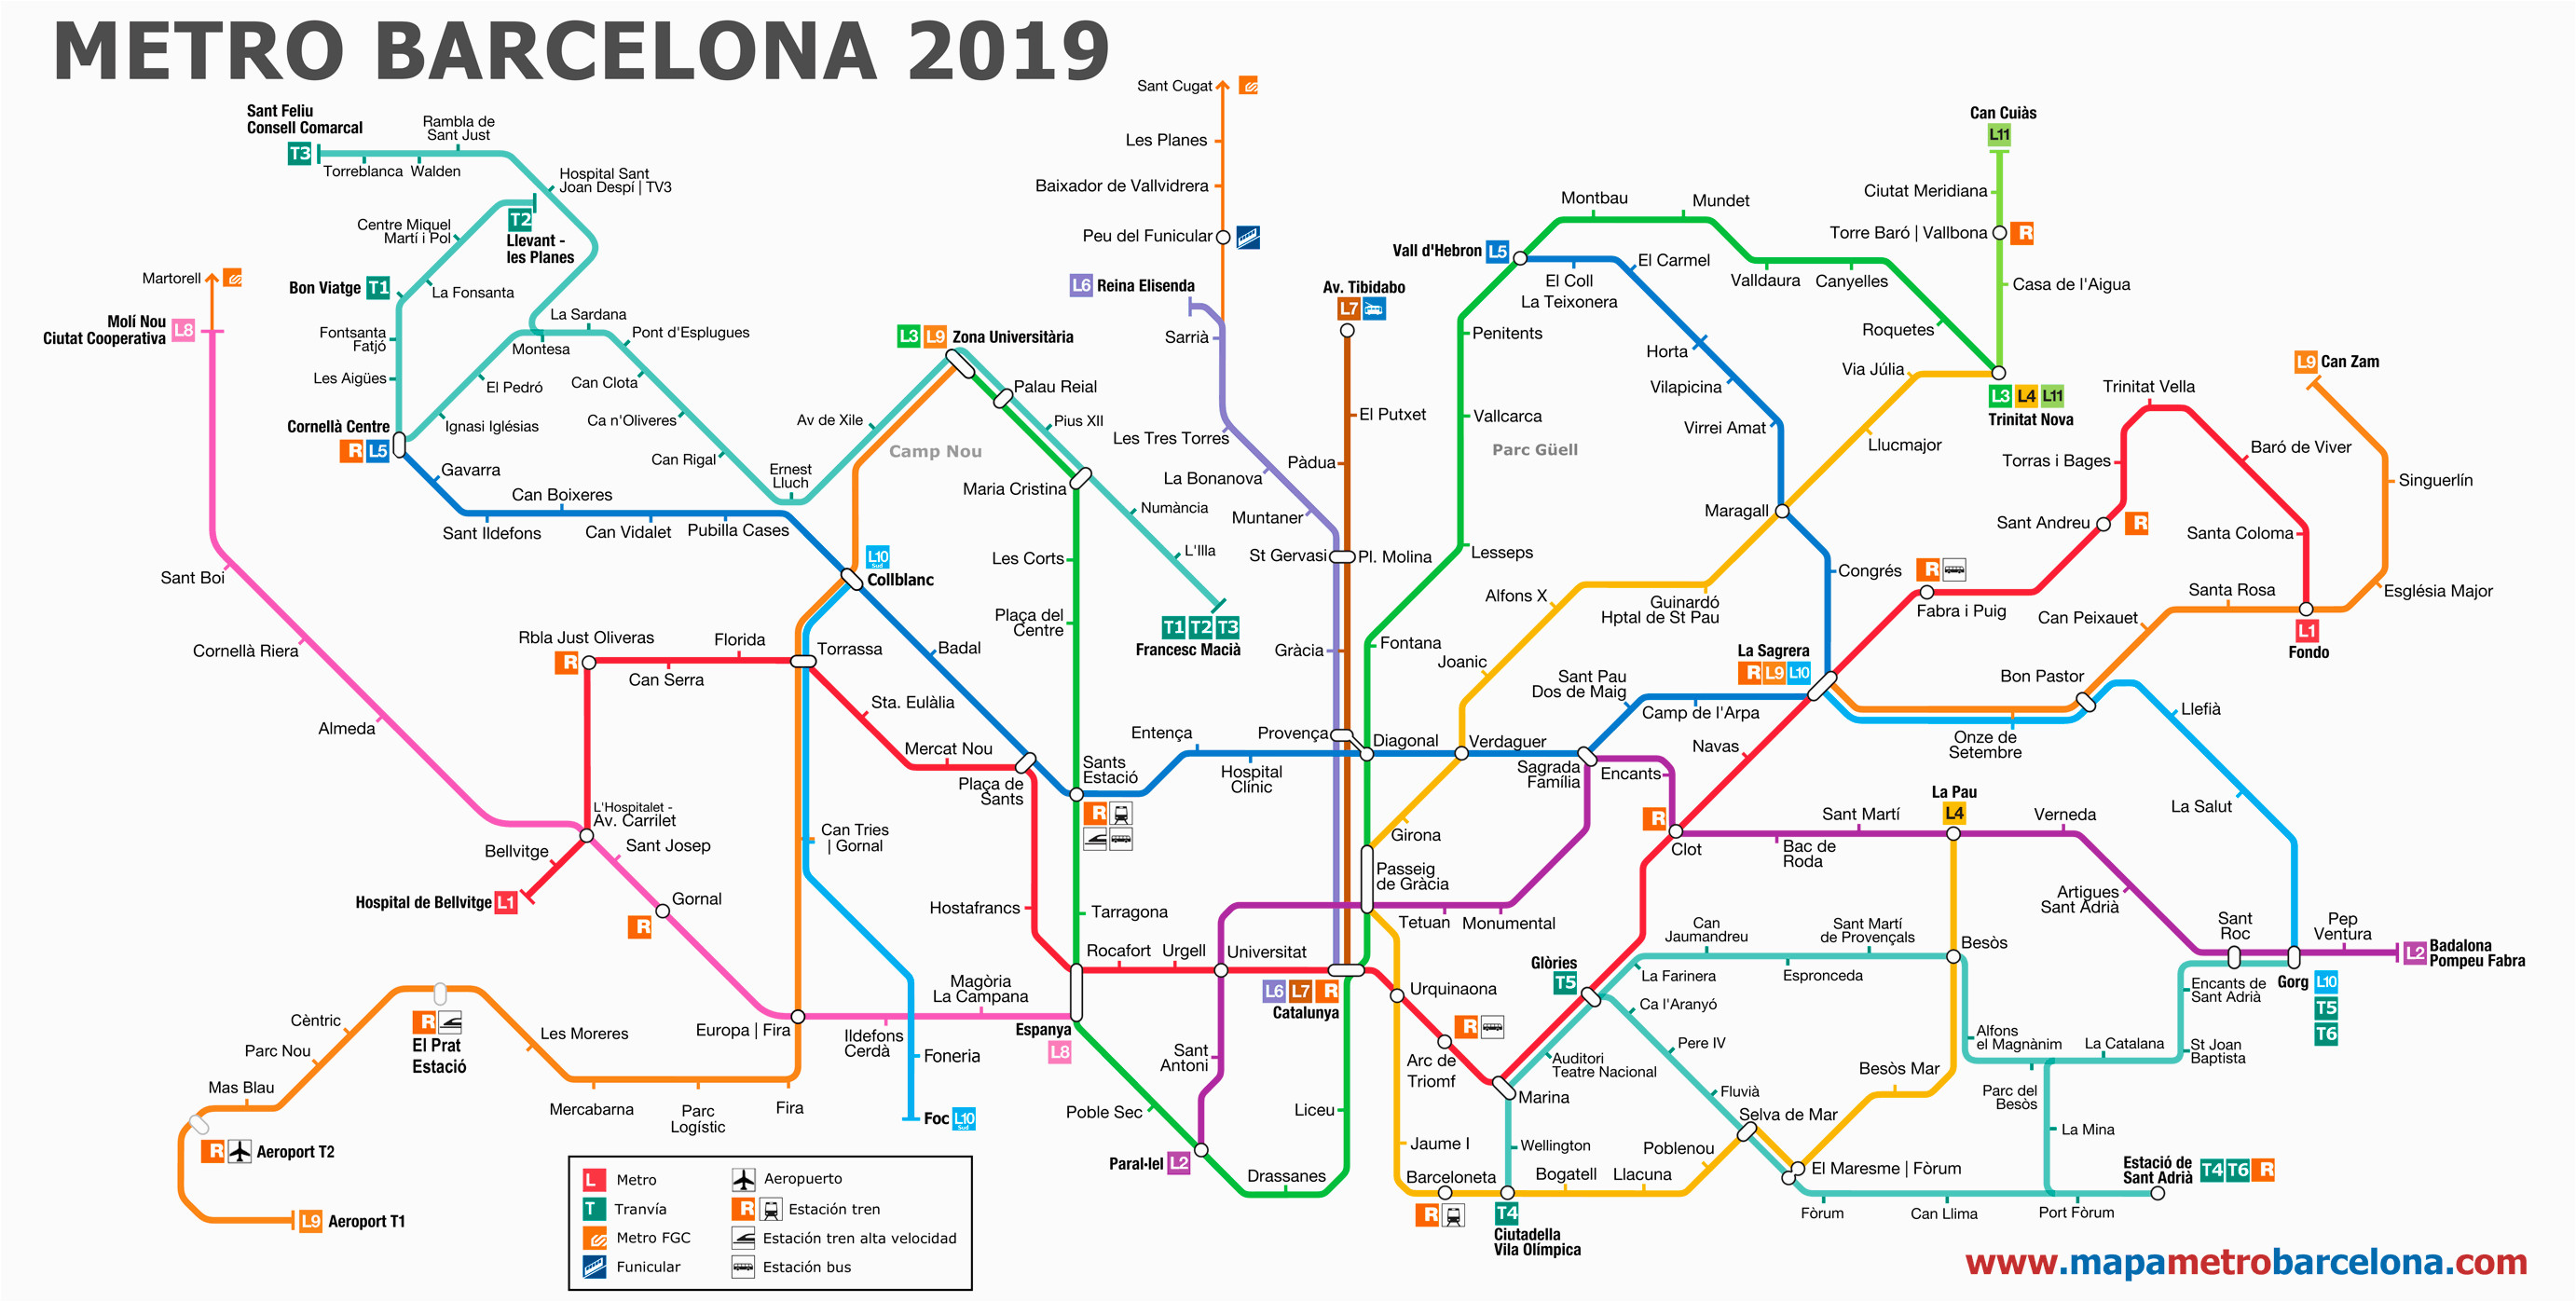 Rome Italy Metro Map Metro Map Of Barcelona 2019 The Best Of Rome Italy Metro Map 1 